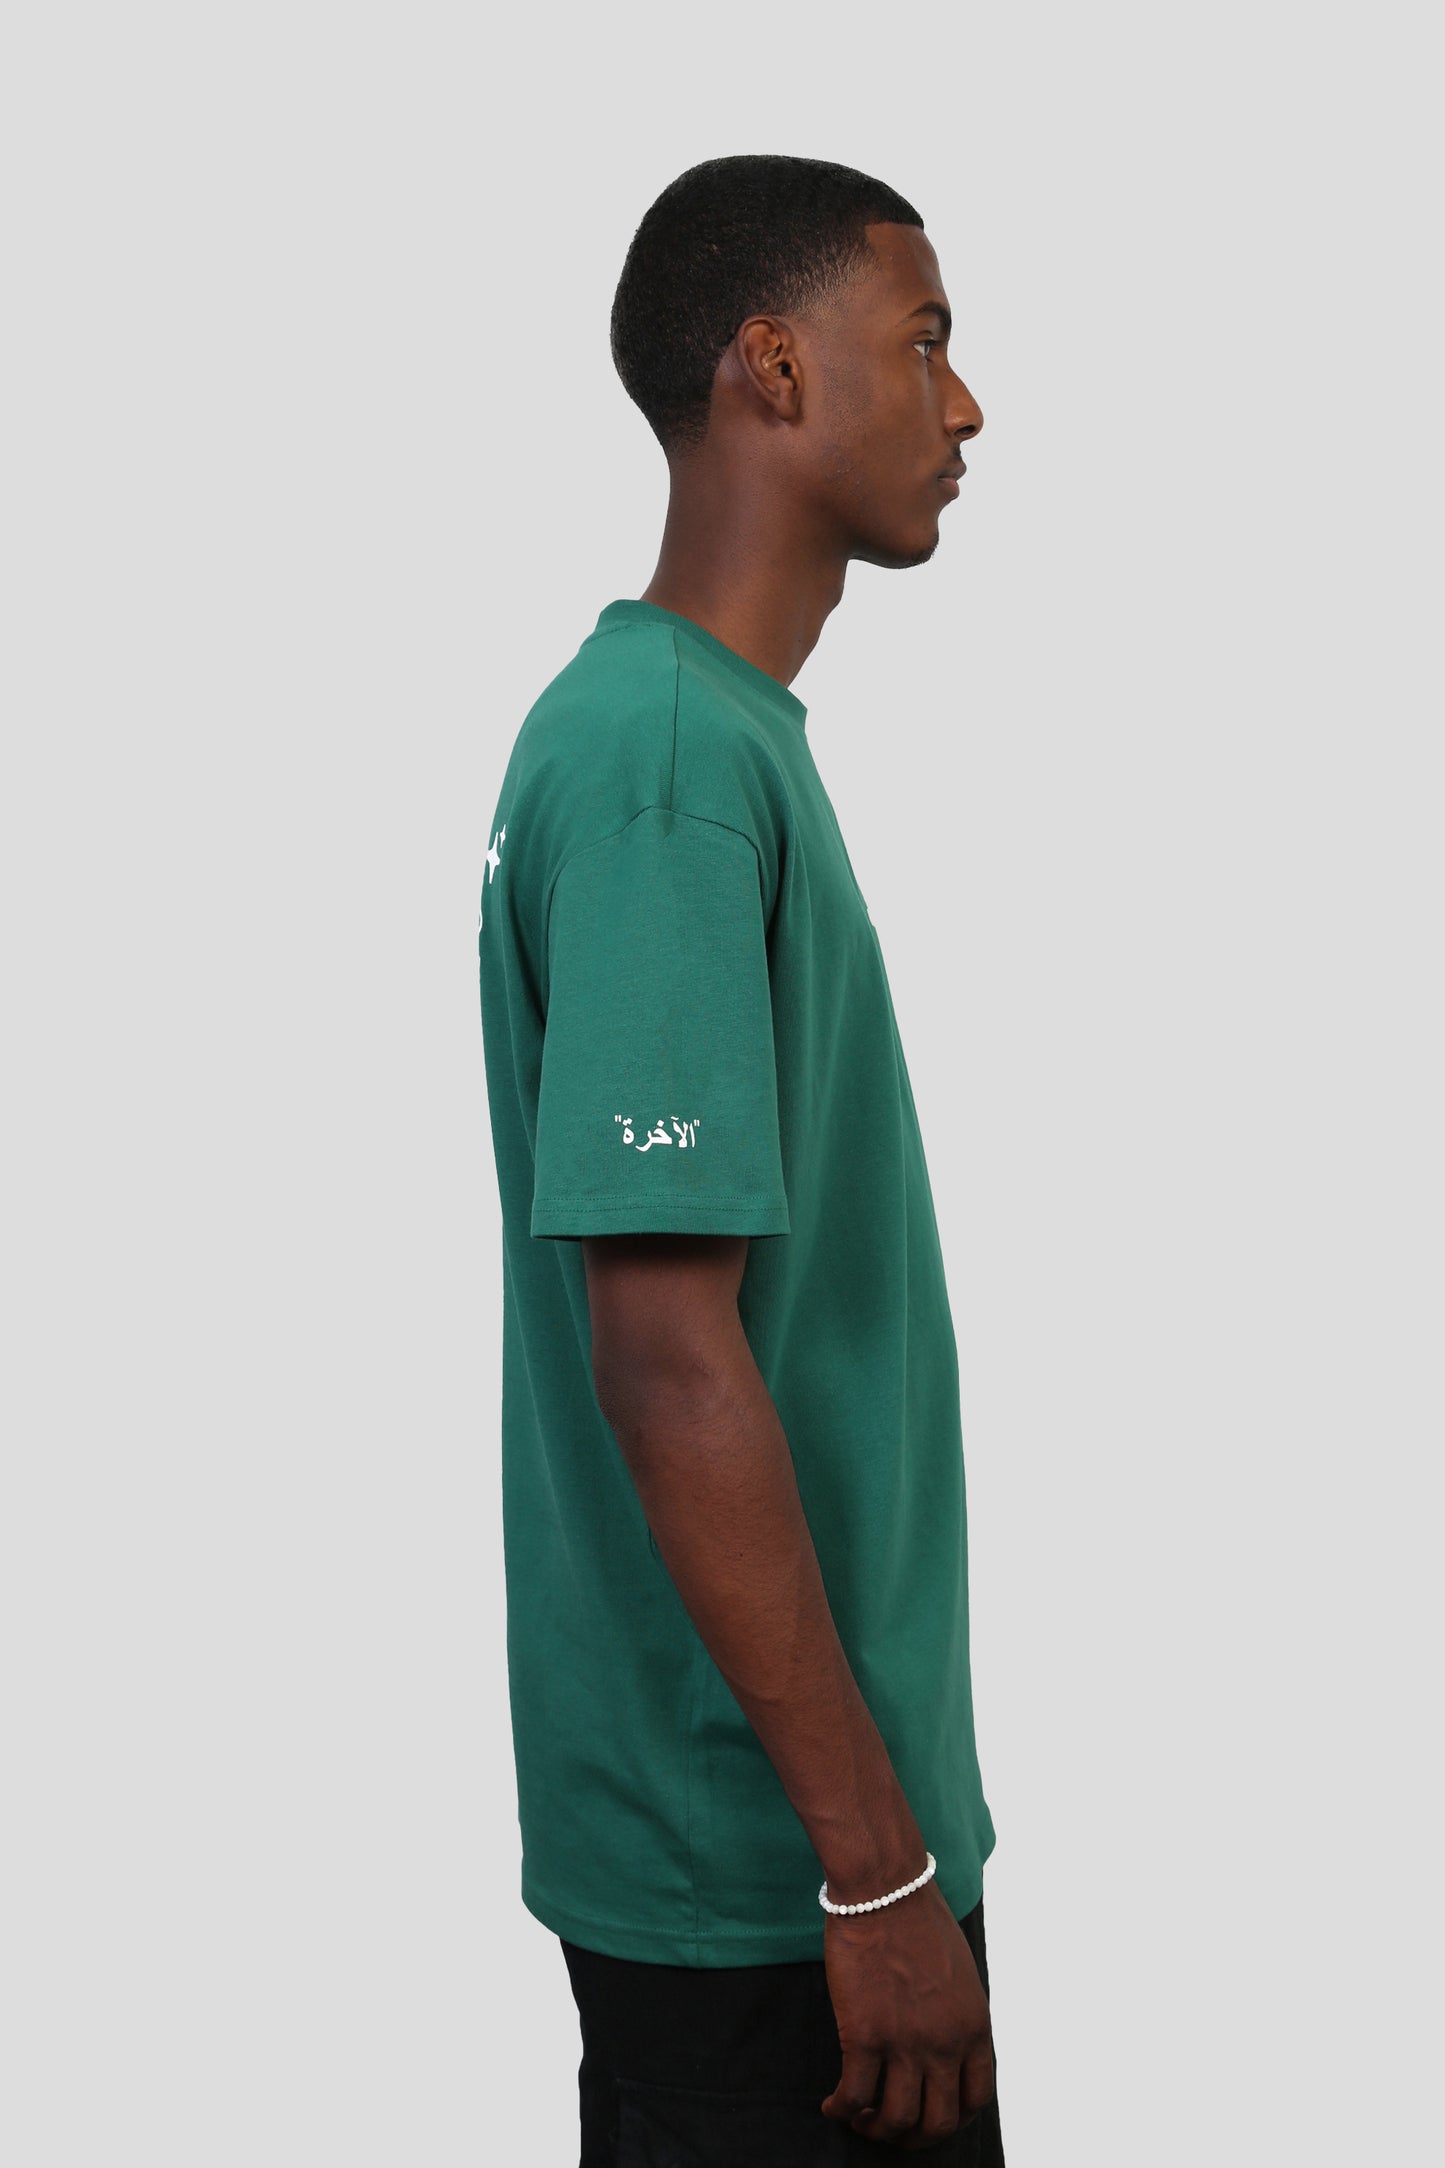 www.ninetyninestudios.de| AFTERLIFE T-SHIRT GREEN| T-Shirt | €34.99 | Revolutionary Islamic Streetwear | 99Studios